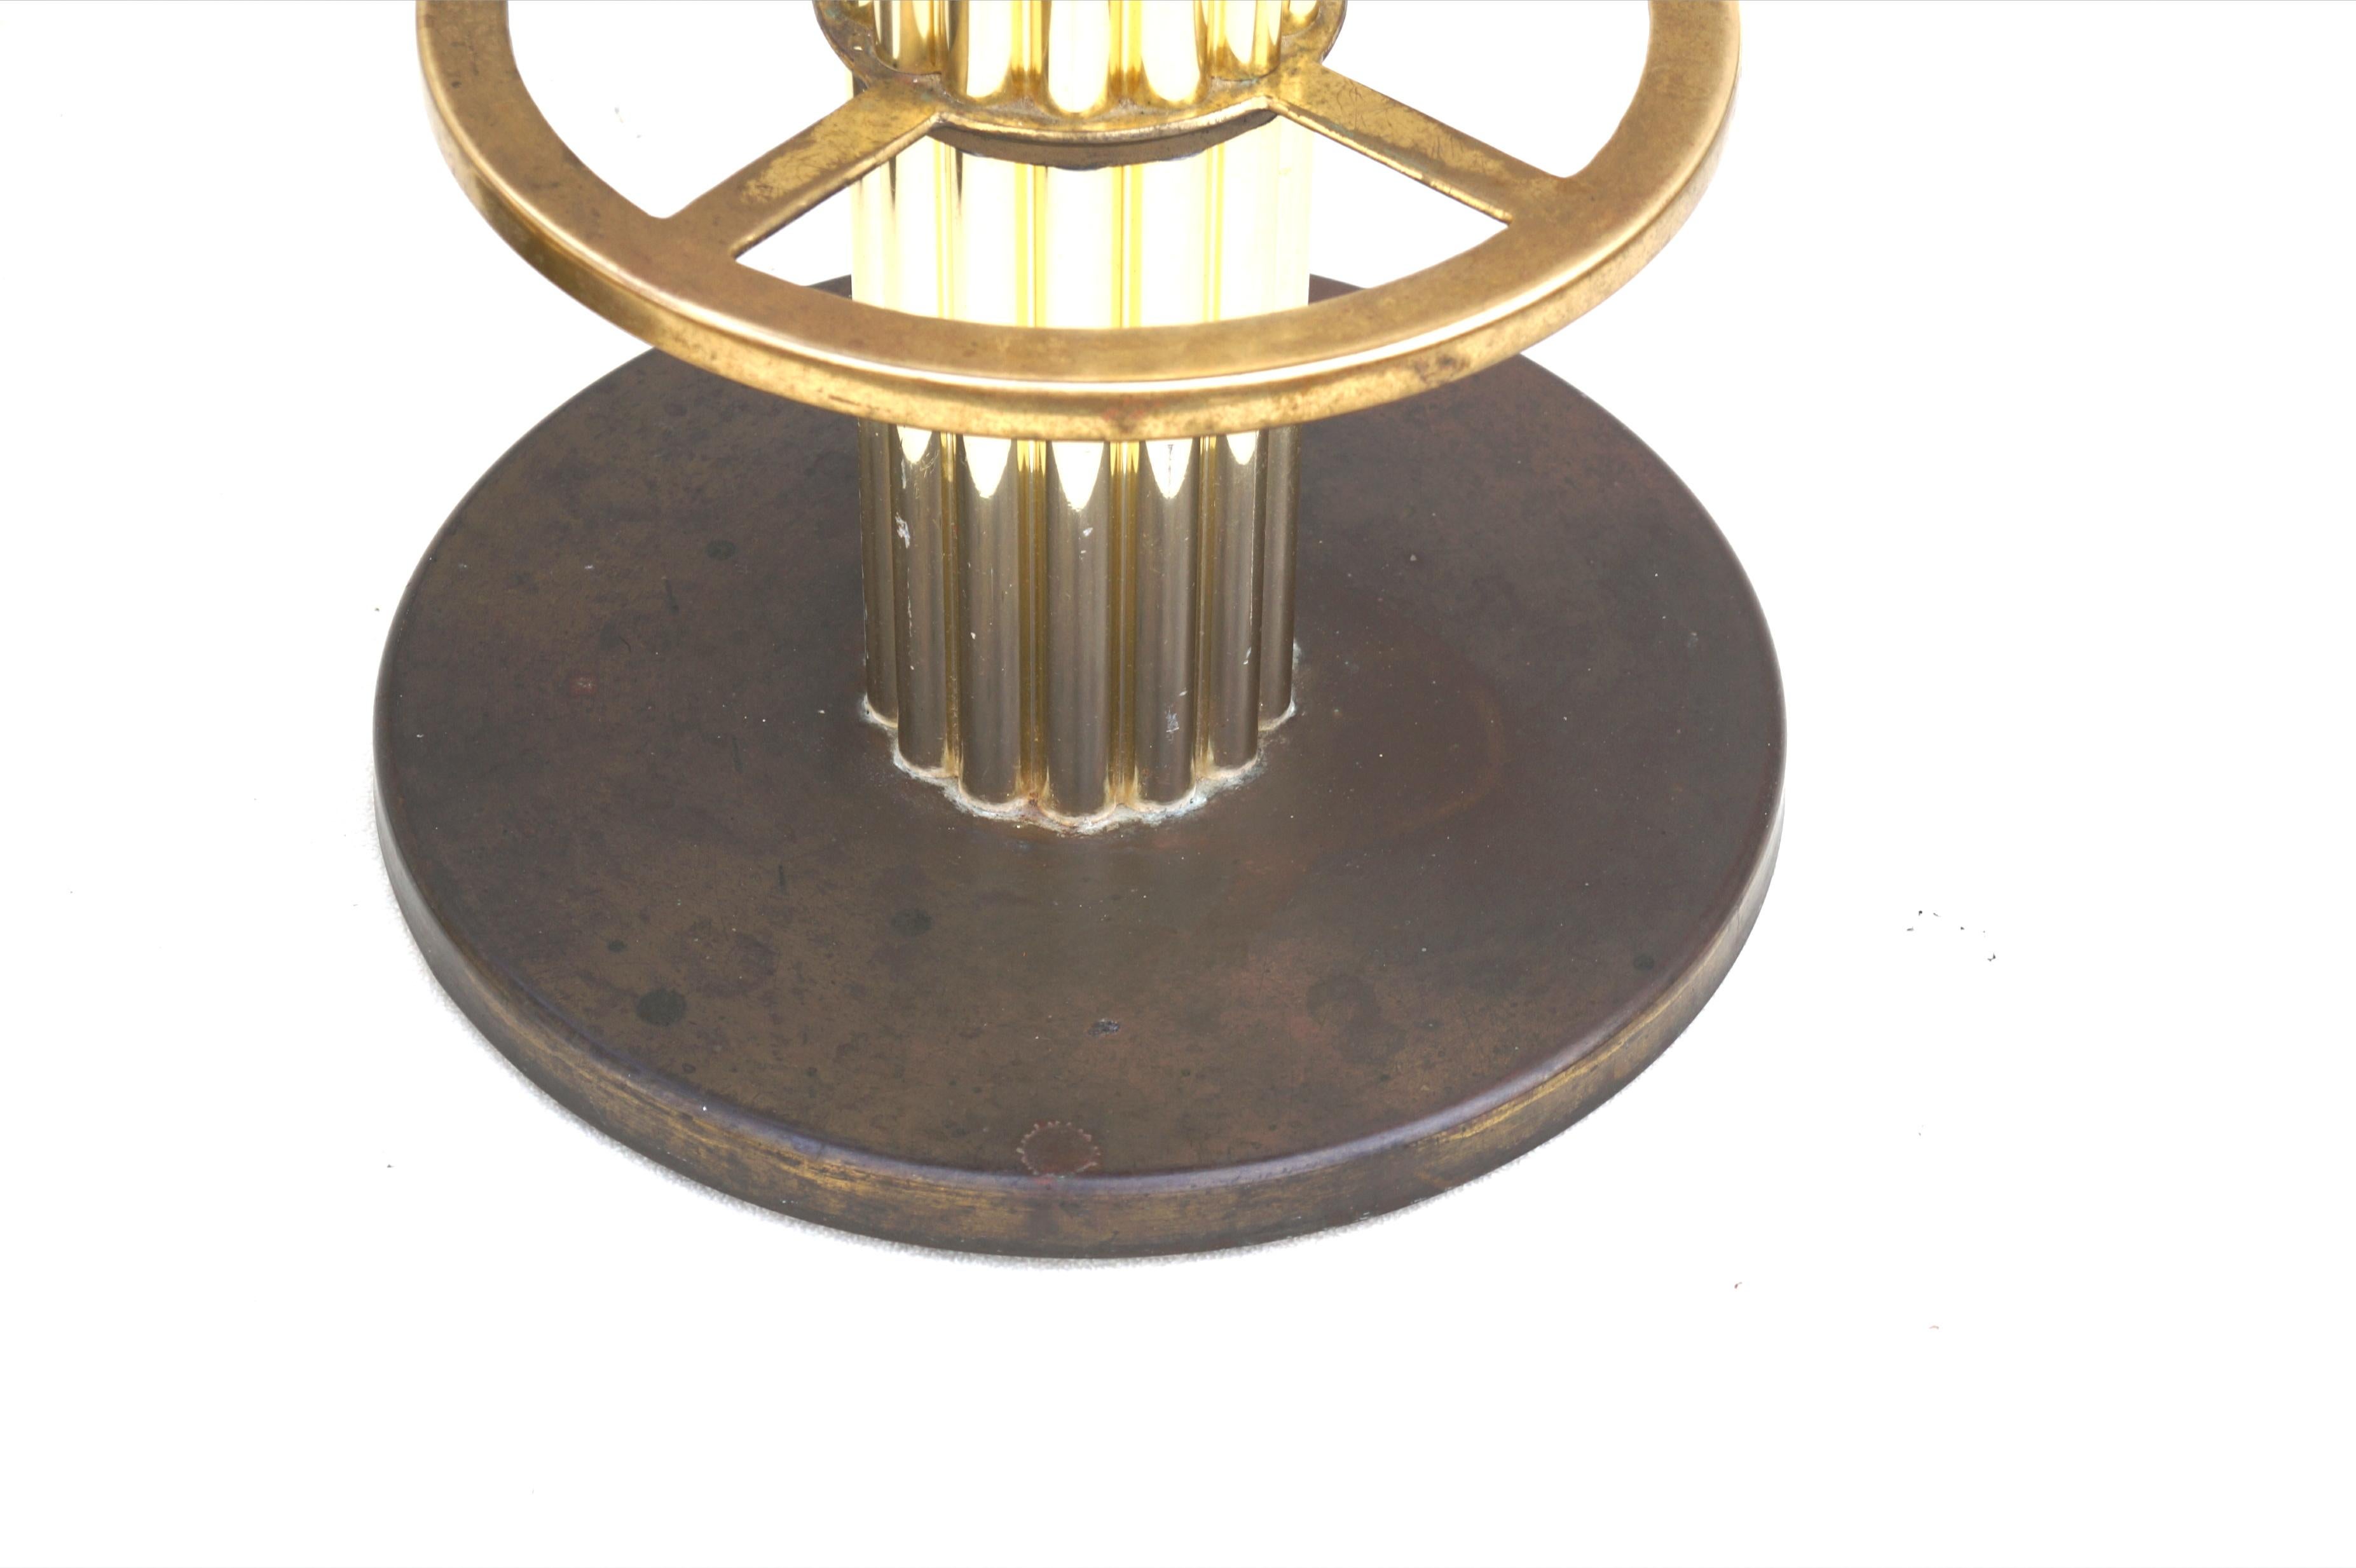 Metal Modern Design For Leisure Ostrich Brass Bar Stools Set of 3 Barstool